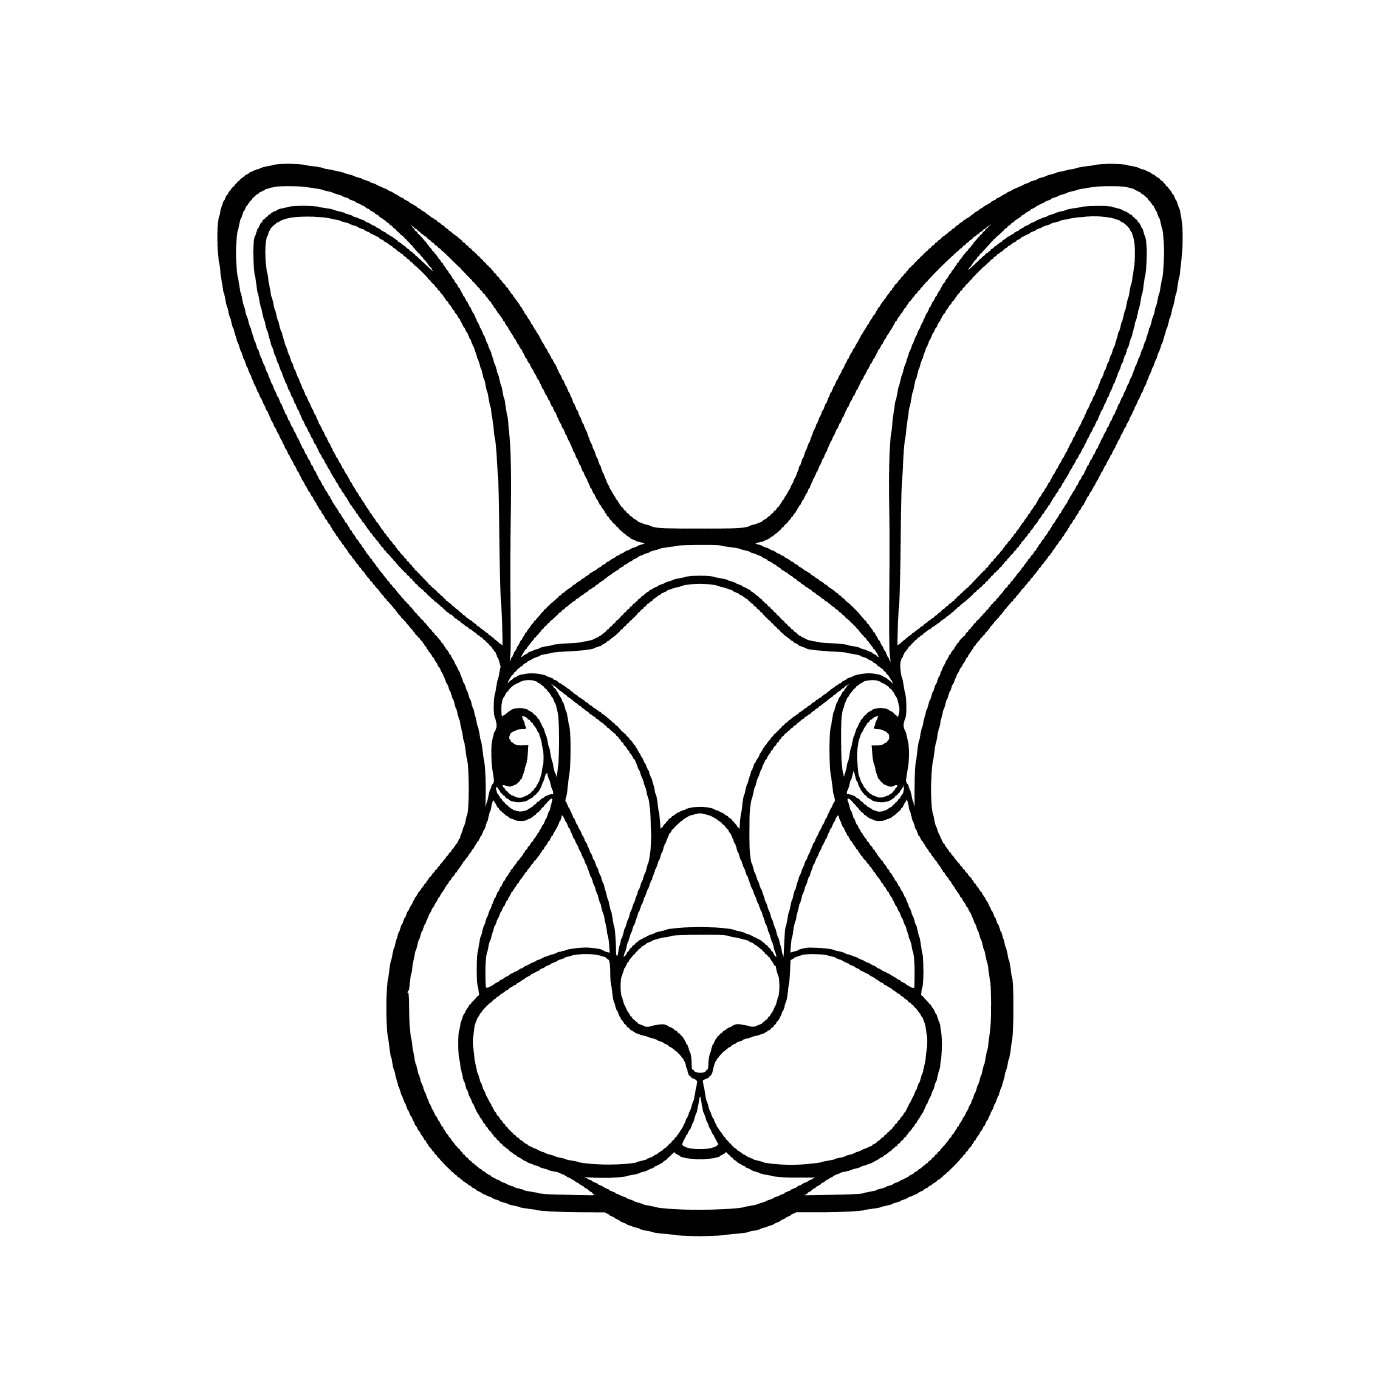  Cute rabbit in 3D 